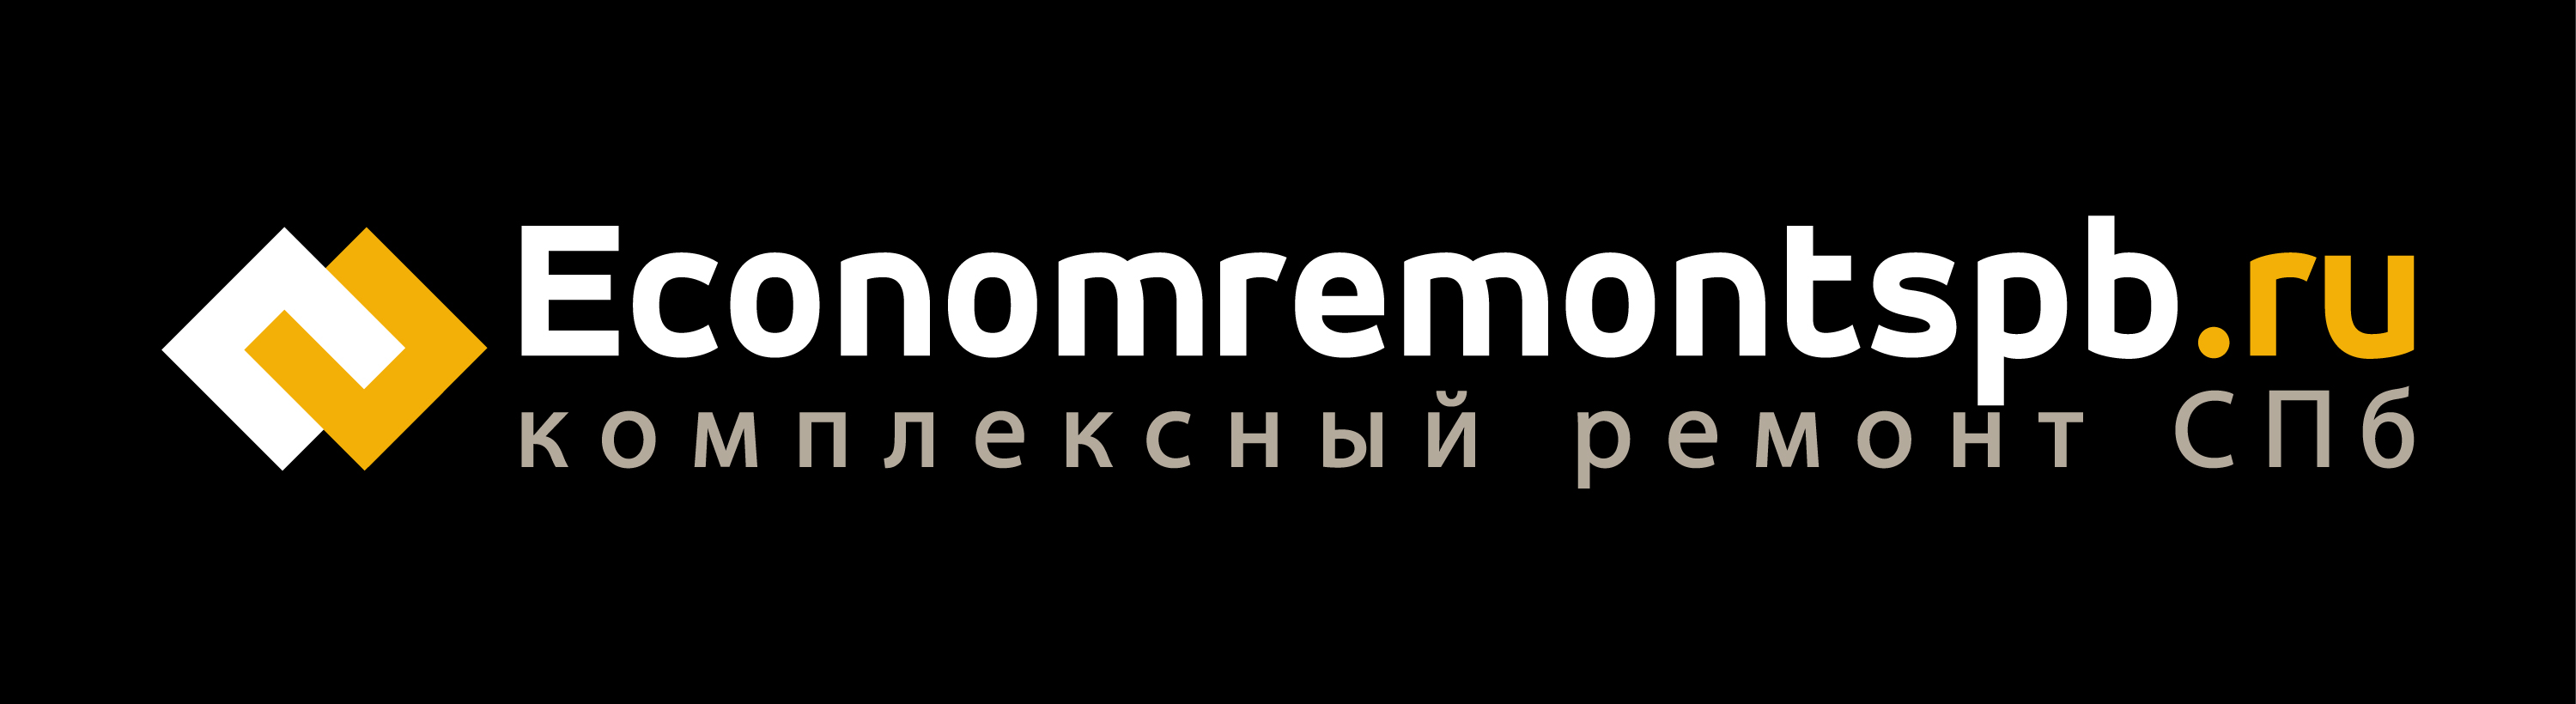 Economremontspb.ru